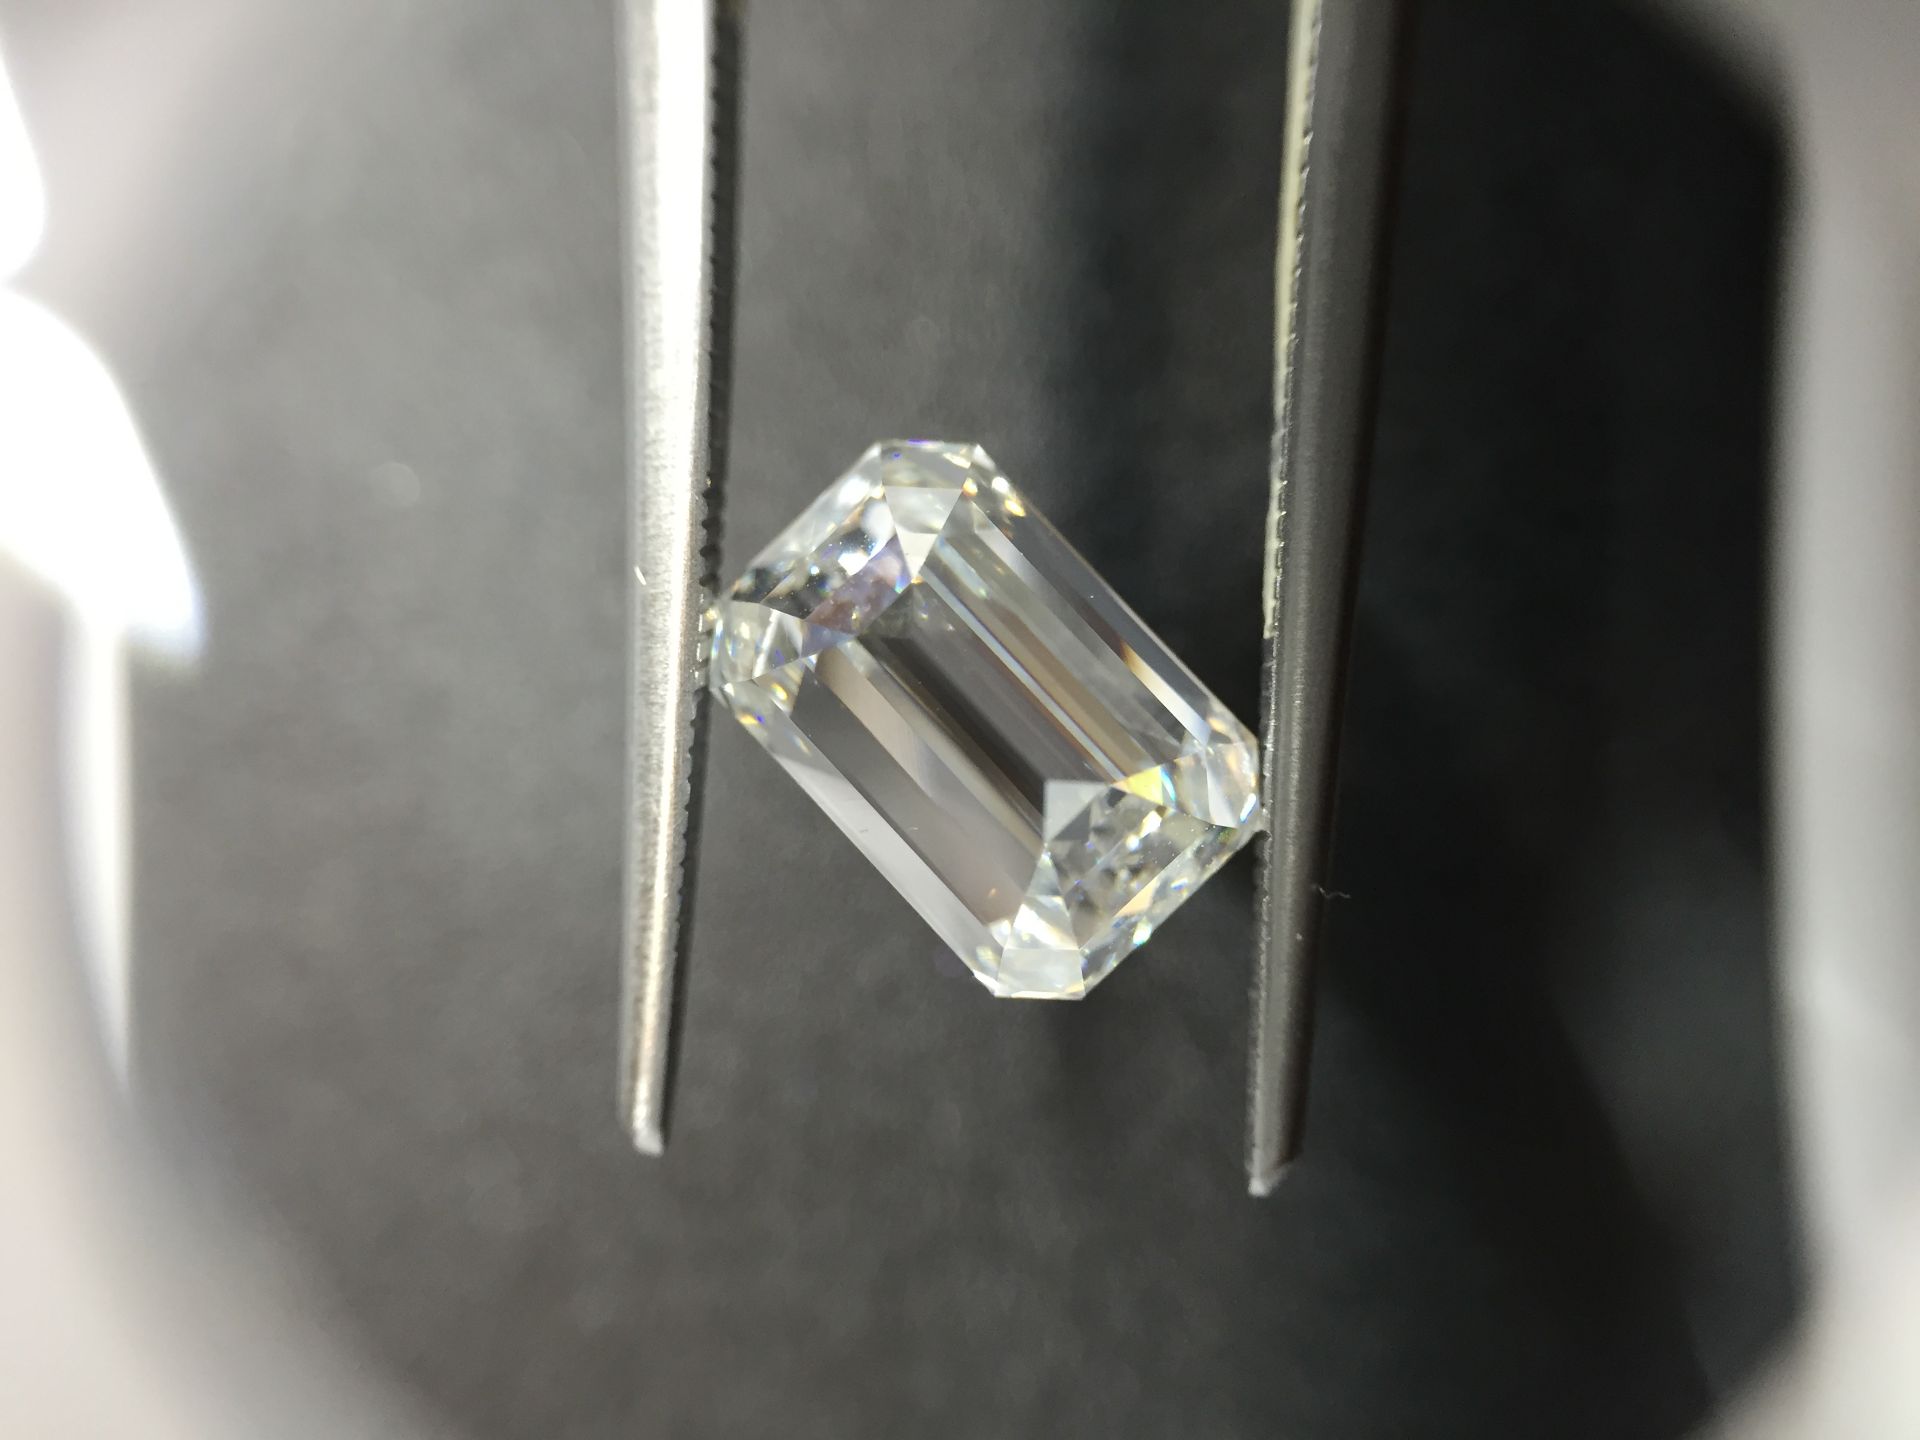 3.02ct emerald cut diamond. G colour, vvs1 clarity. 9.71 x 6.51 x 5.03mm. IGI certificate Ð